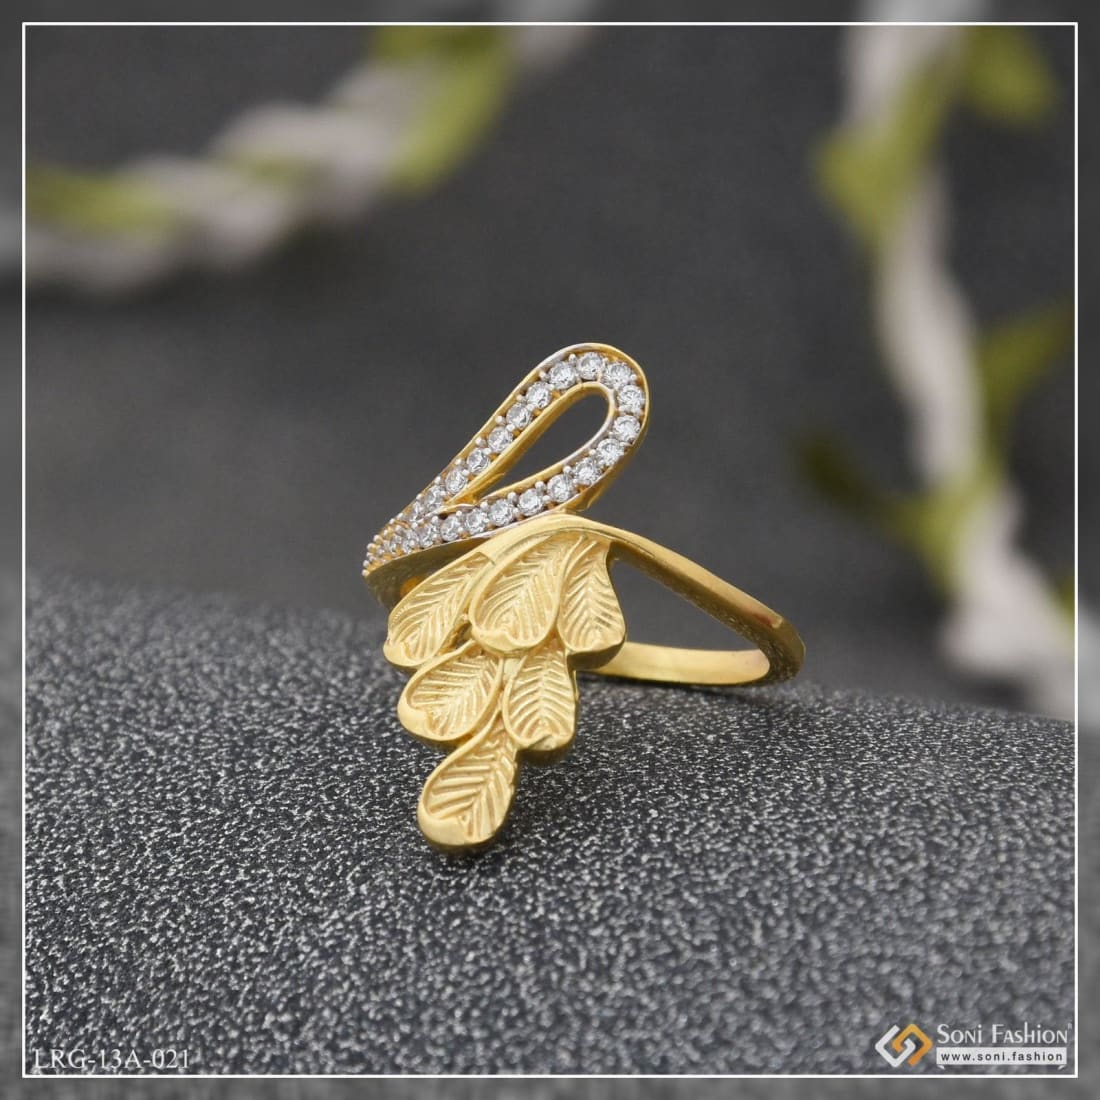 22k Gold Ring Beautiful Enameled Stone Studded Ladies Jewelry Select Size  Ring 2 | eBay